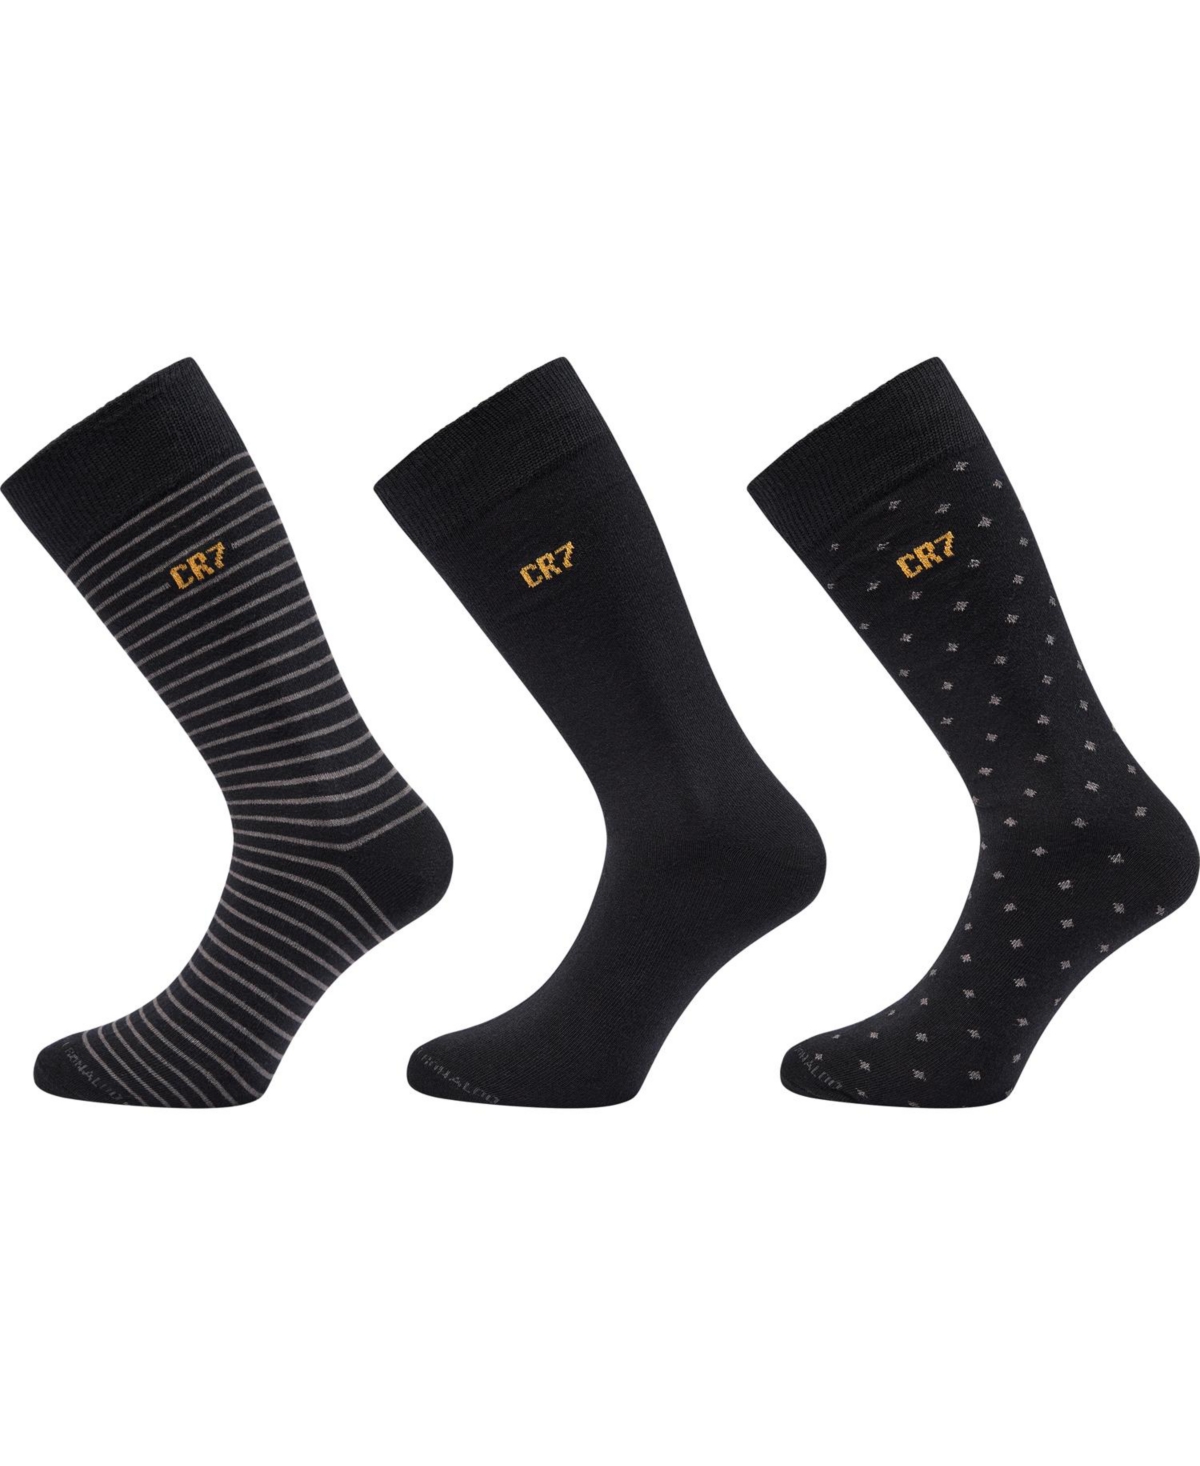 Men's Fashion Socks, 3-pack in gift-box - Black, Gold